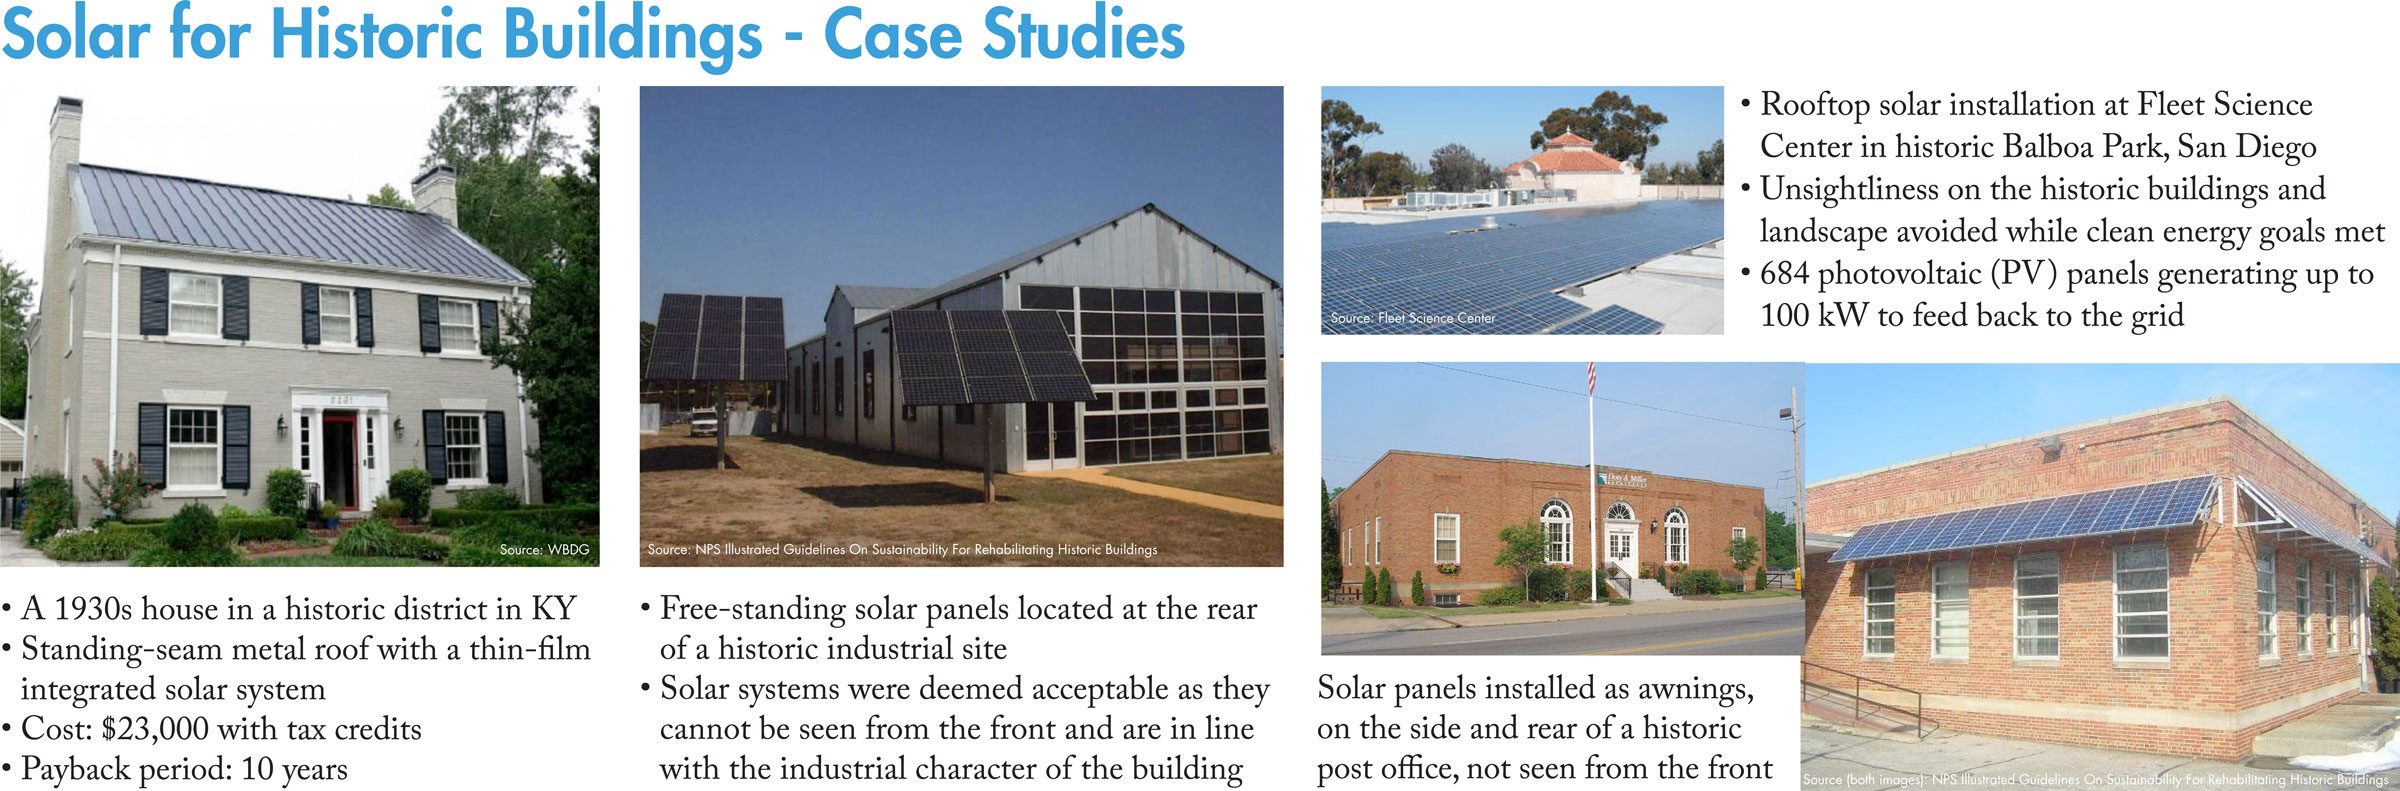 Solar for Historic Buildings